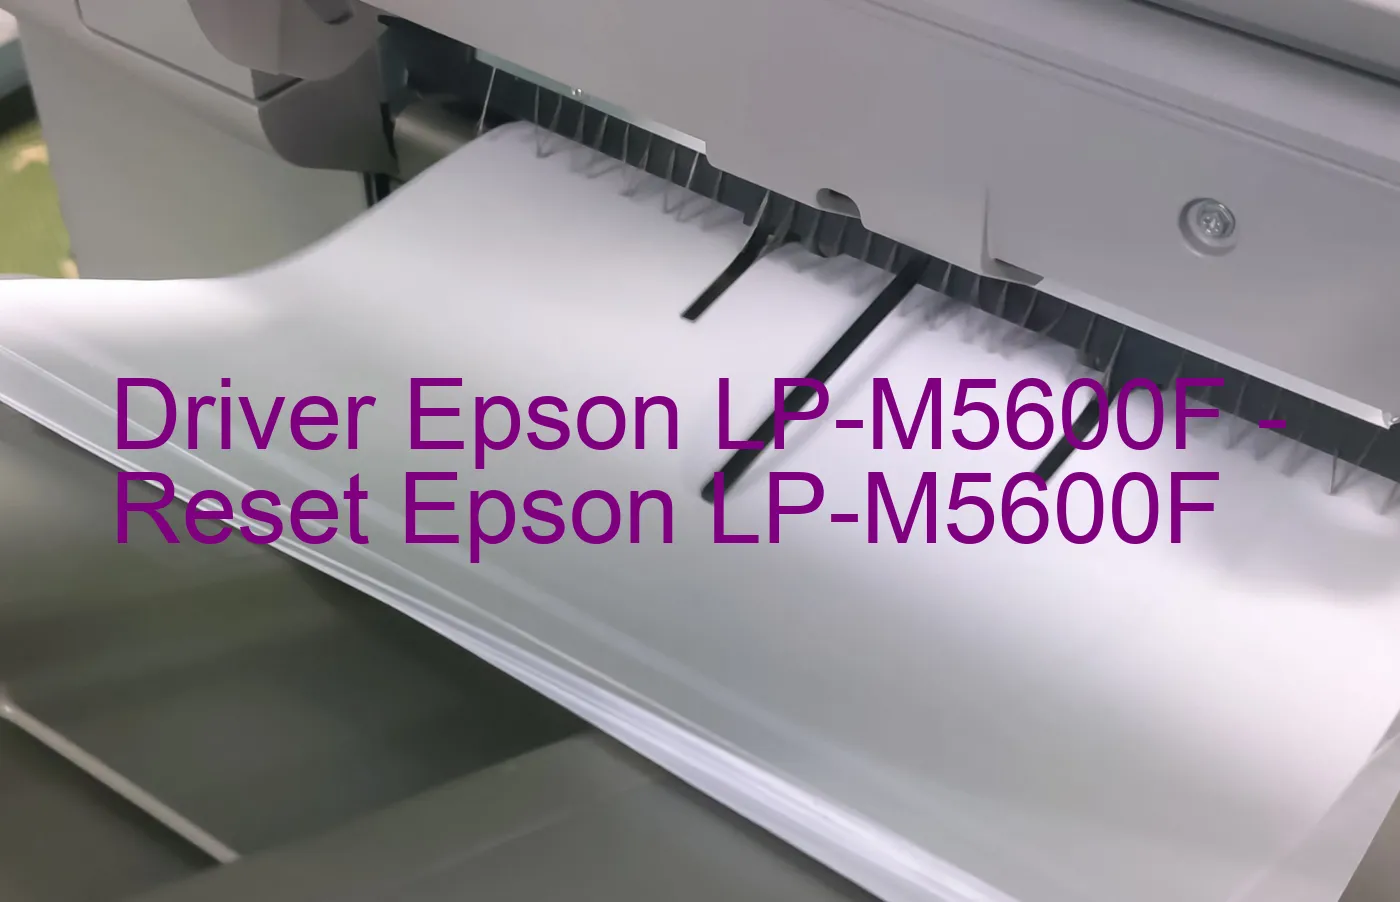 Epson LP-M5600Fのドライバー、Epson LP-M5600Fのリセットソフトウェア